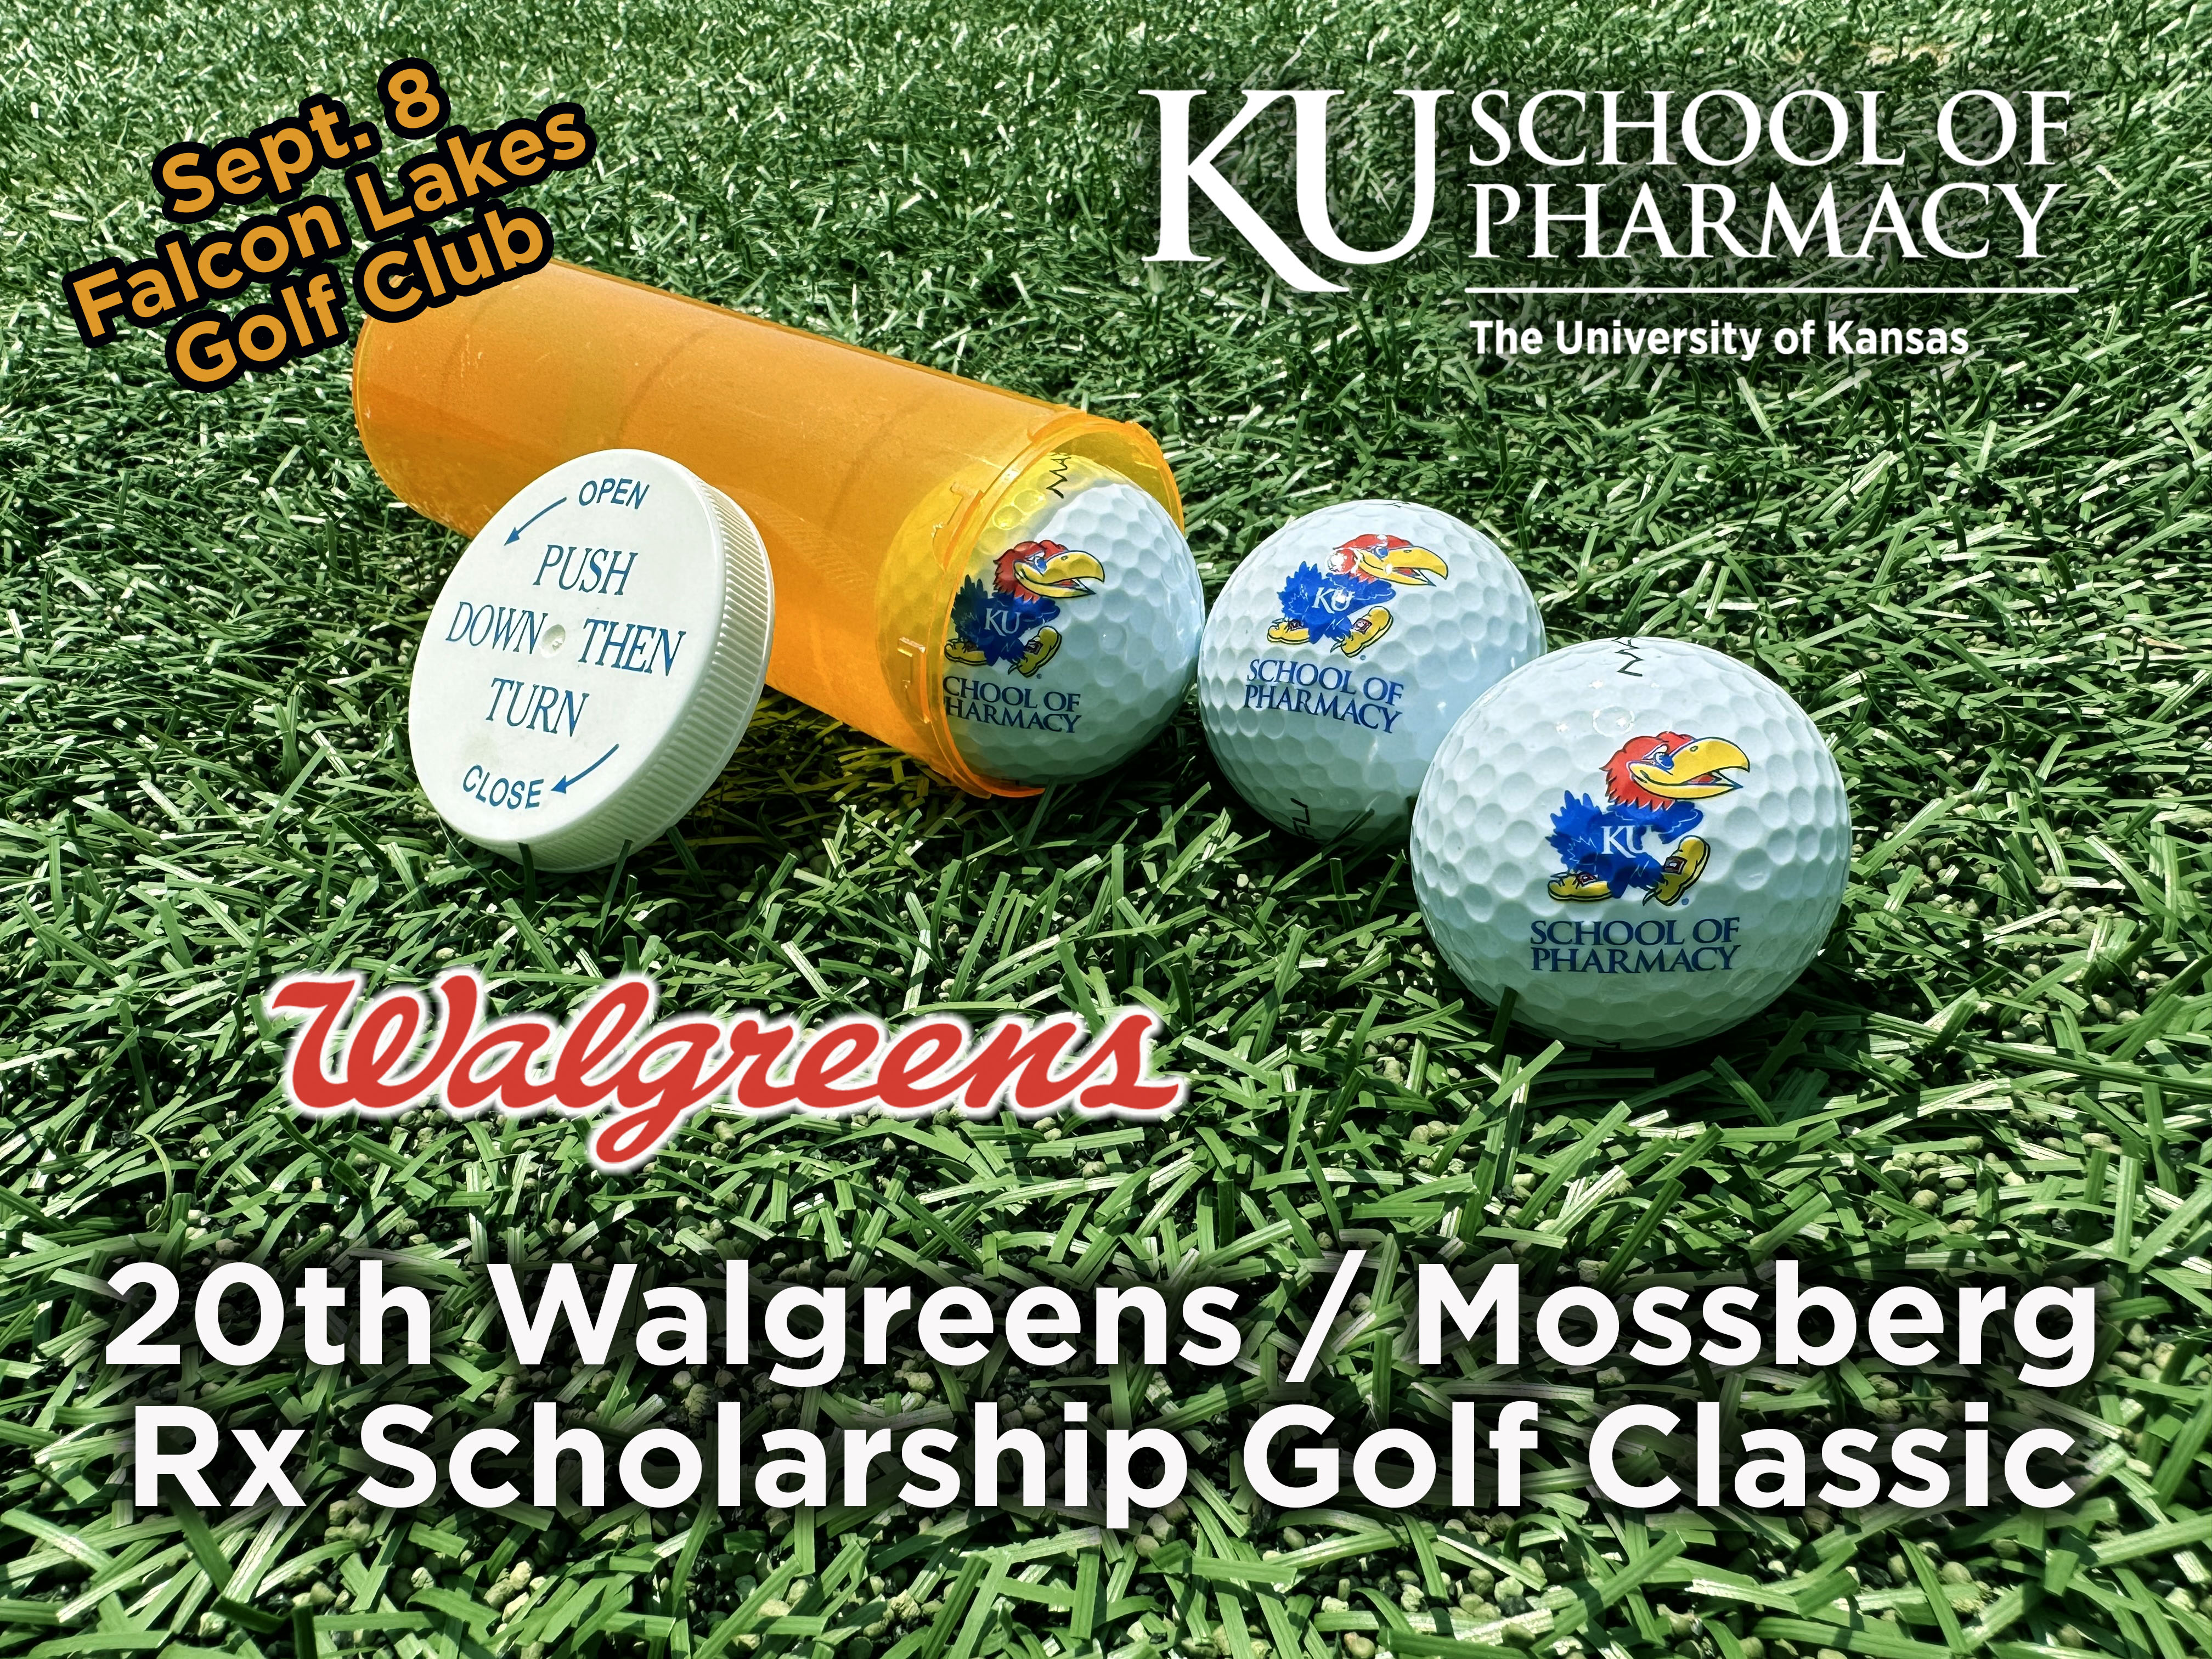 20th Walgreens/Mossberg Rx Scholarship Golf Classic. Sept. 8, Falcon Lakes Golf Club.